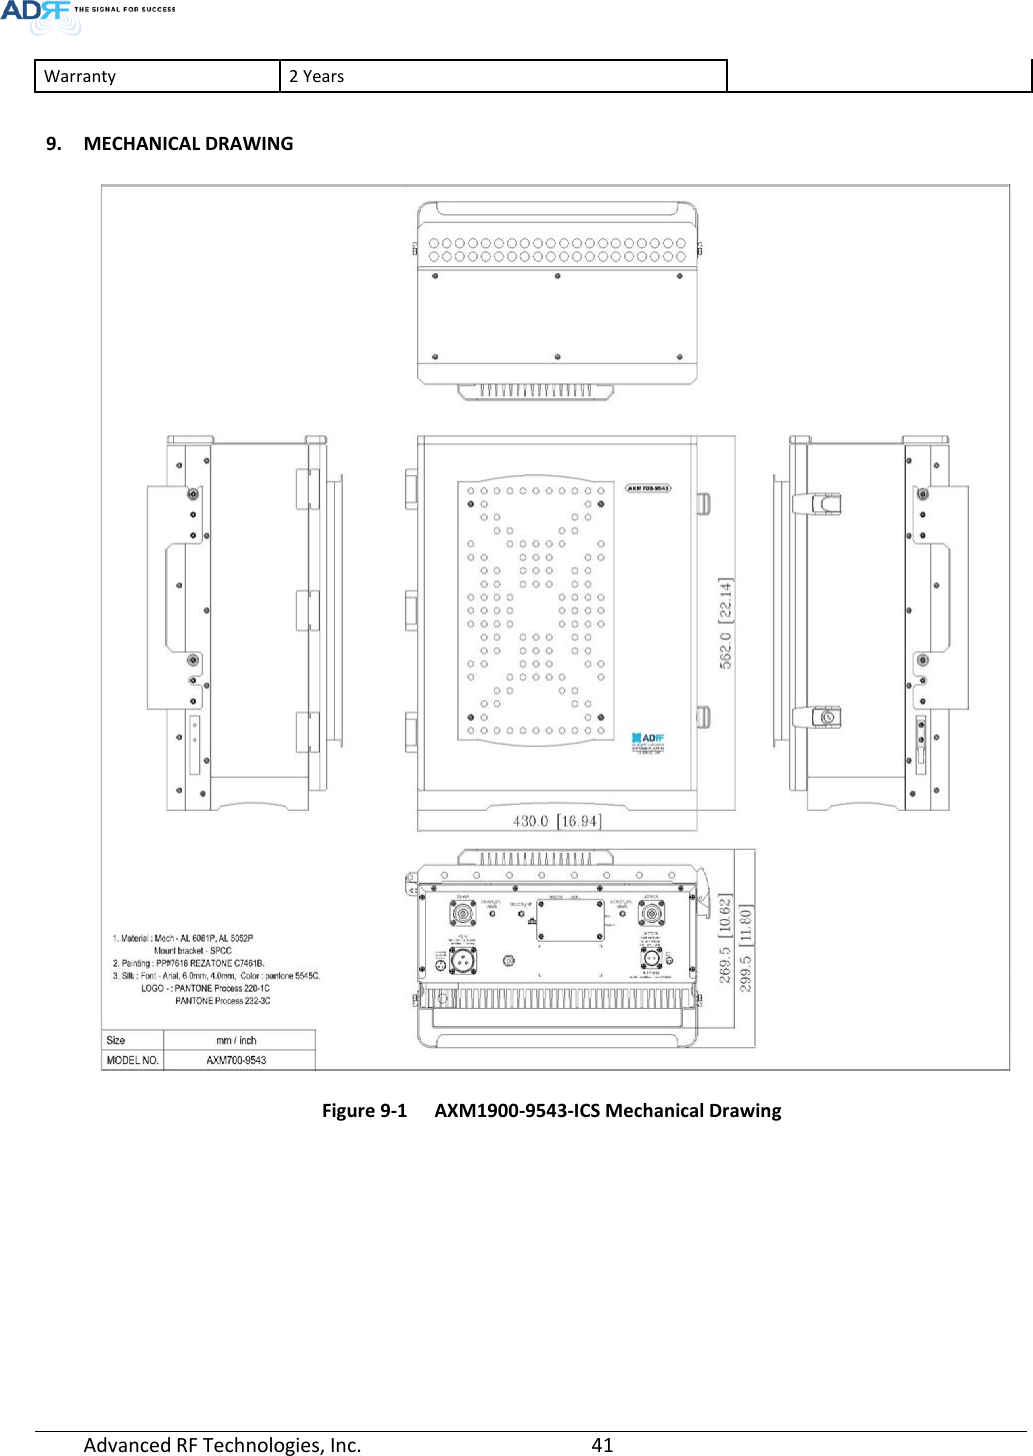  Warranty 2 Years     9. MECHANICAL DRAWING  Figure 9-1  AXM1900-9543-ICS Mechanical Drawing    Advanced RF Technologies, Inc.       41    